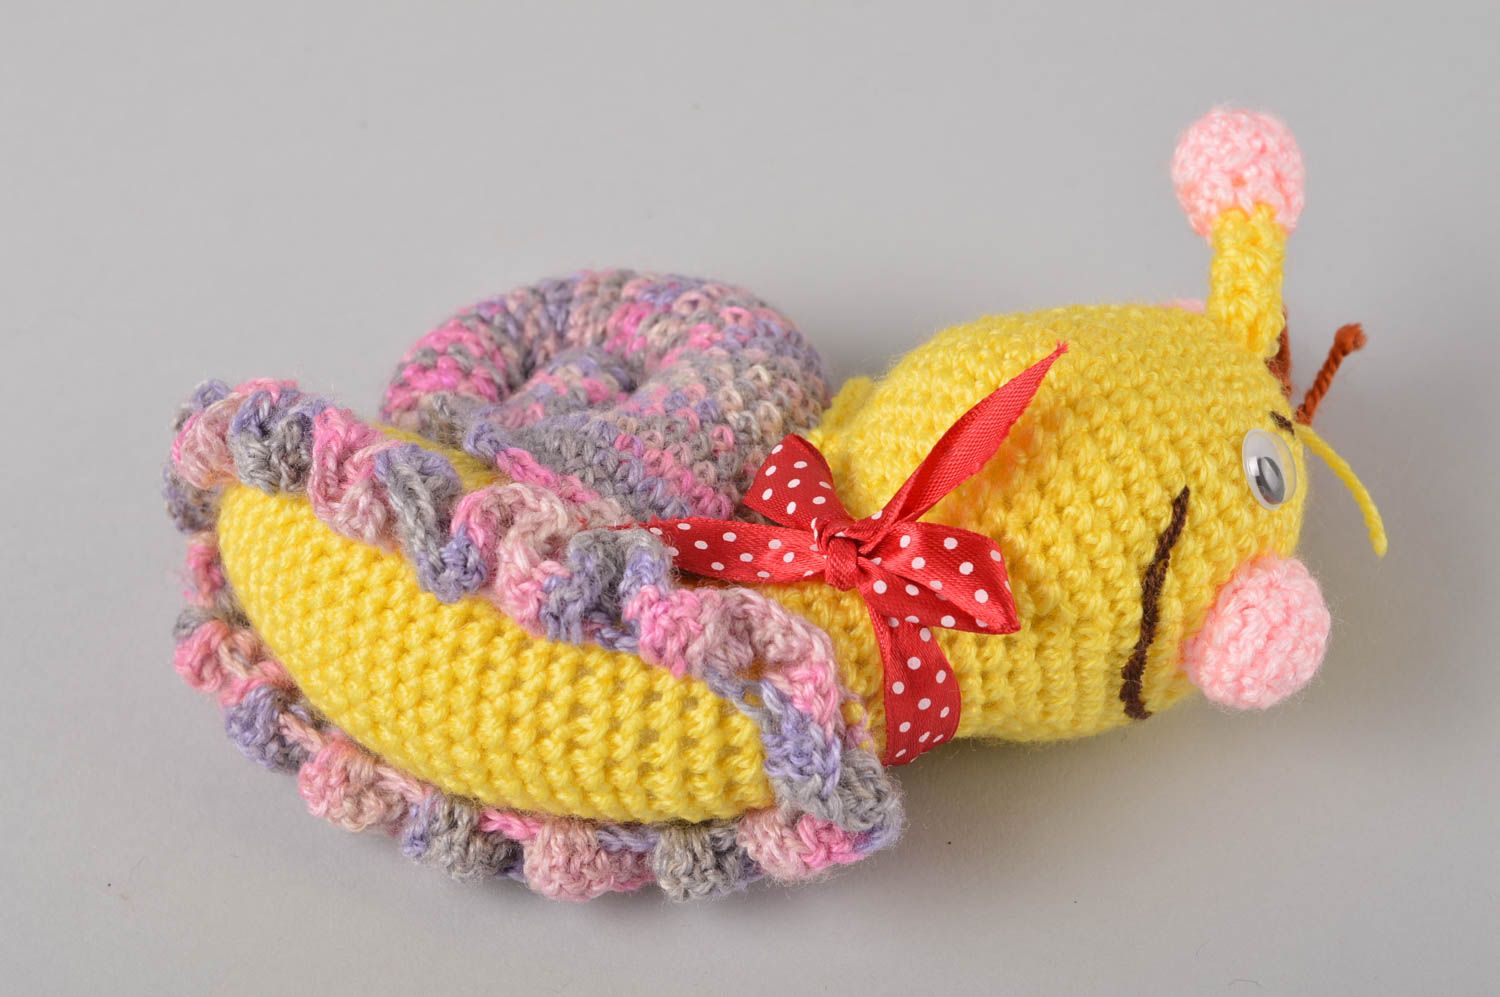 Handmade toy designer toy soft toy nursery decor gift ideas crocheted toy photo 2